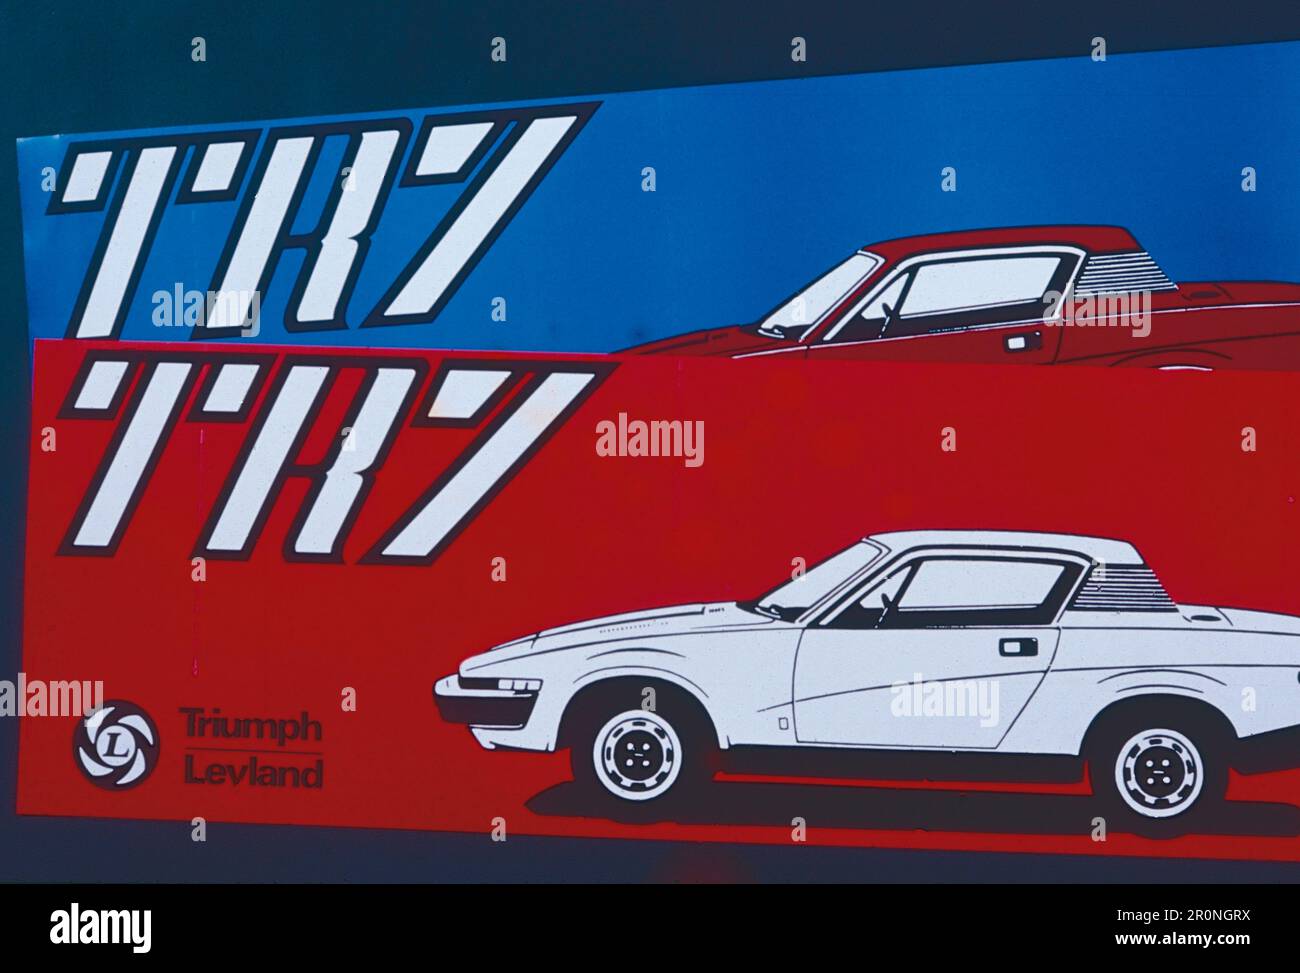 Mustang haube -Fotos und -Bildmaterial in hoher Auflösung – Alamy